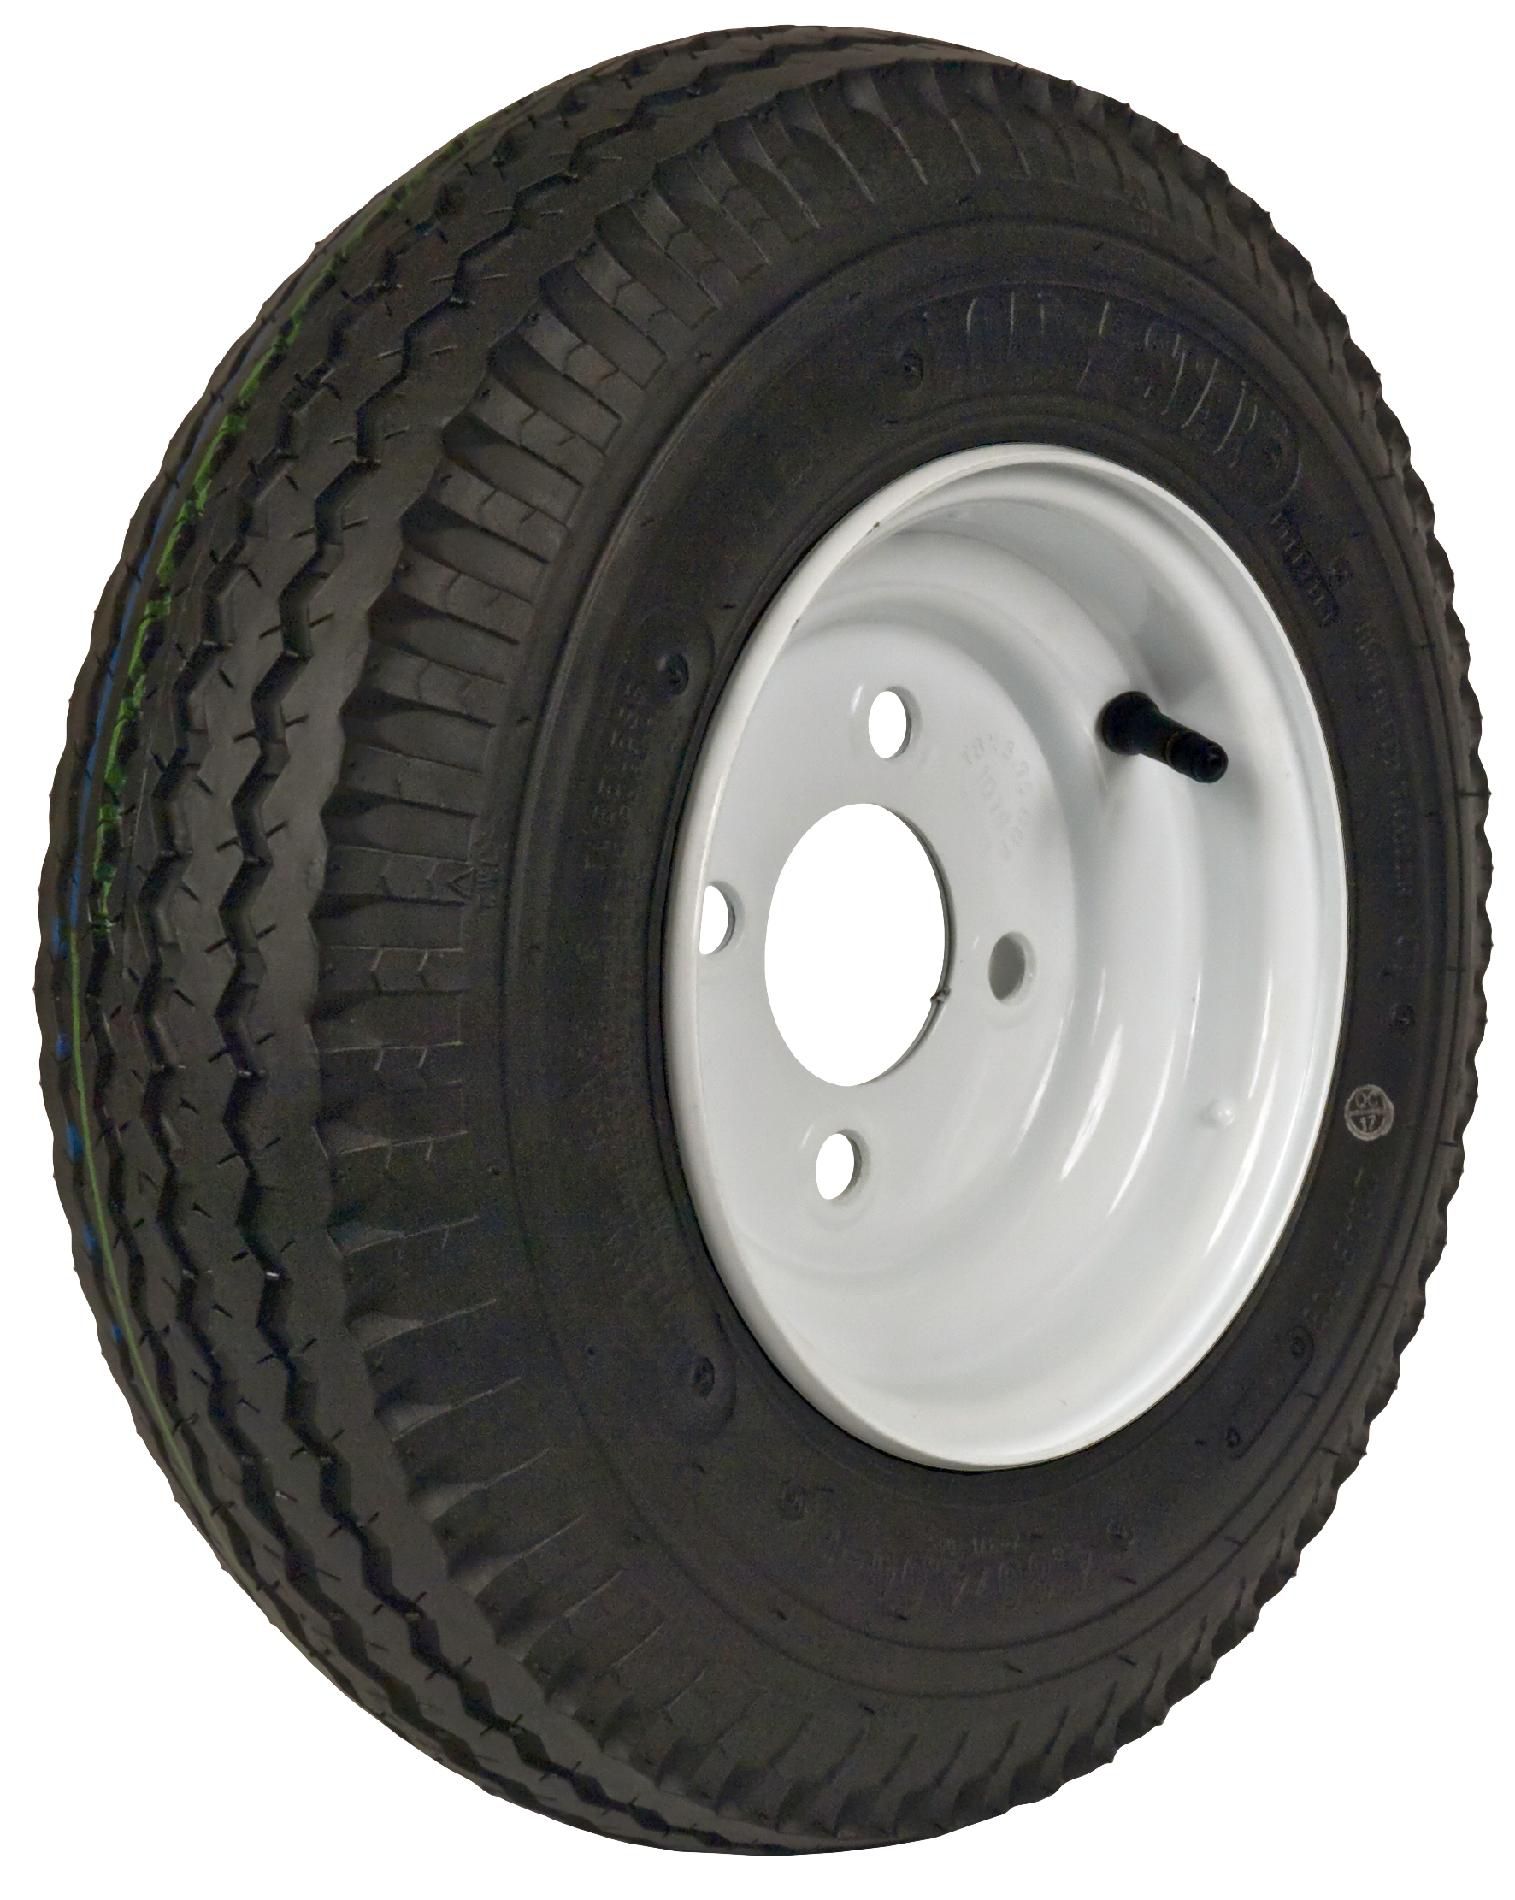 Loadstar DM408B-4I 480/400-8 LRB Trailer Tire and 4-Hole Wheel